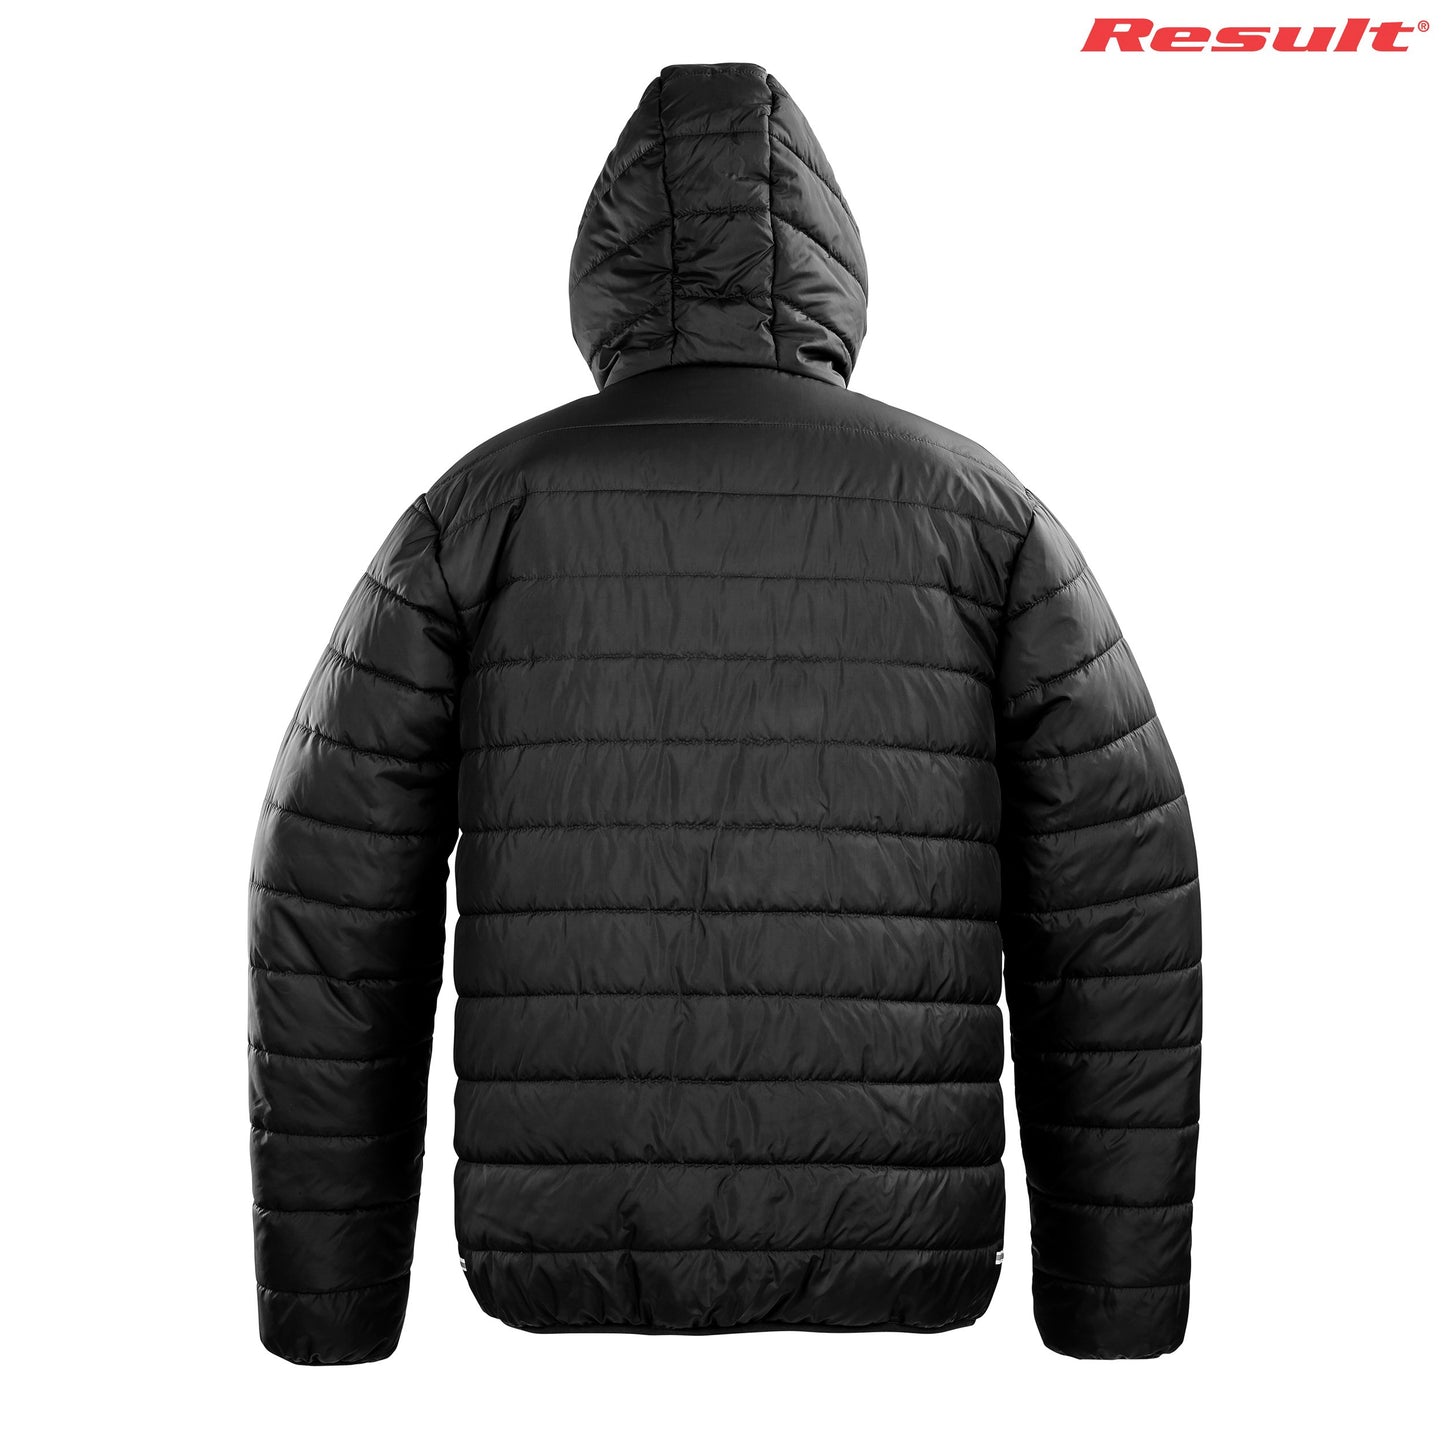 R233M Result Adult Soft Padded Jacket